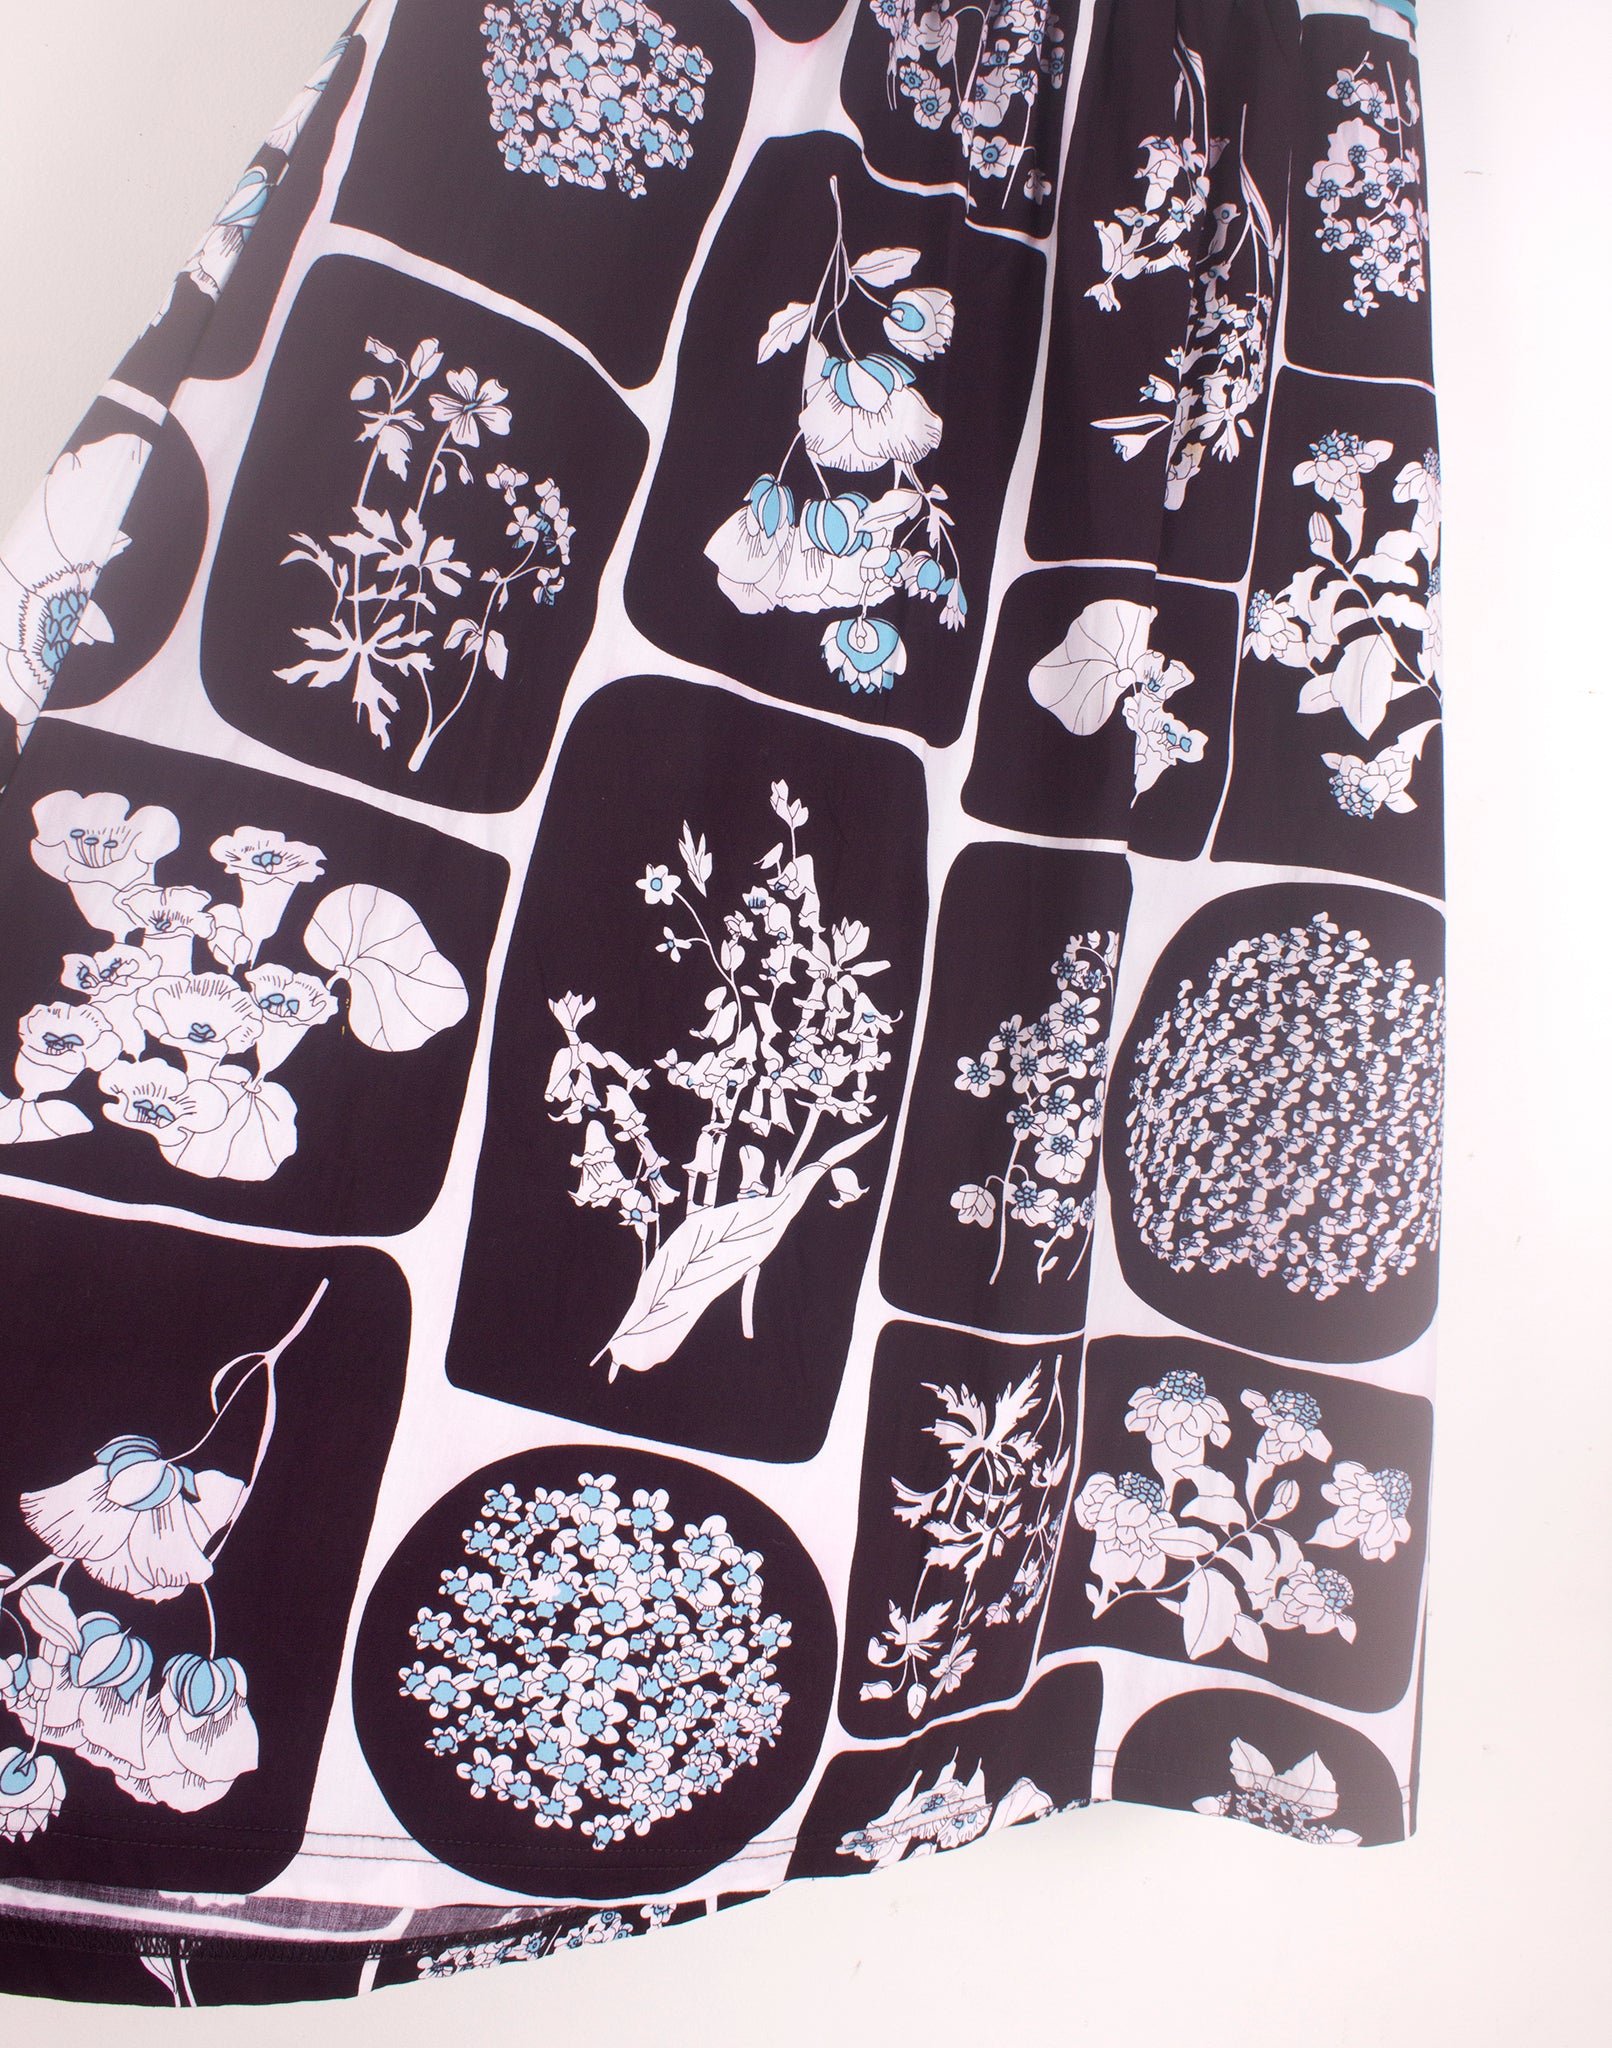 Leona Edmiston Brown Floral Print Halter Dress - Size S / M